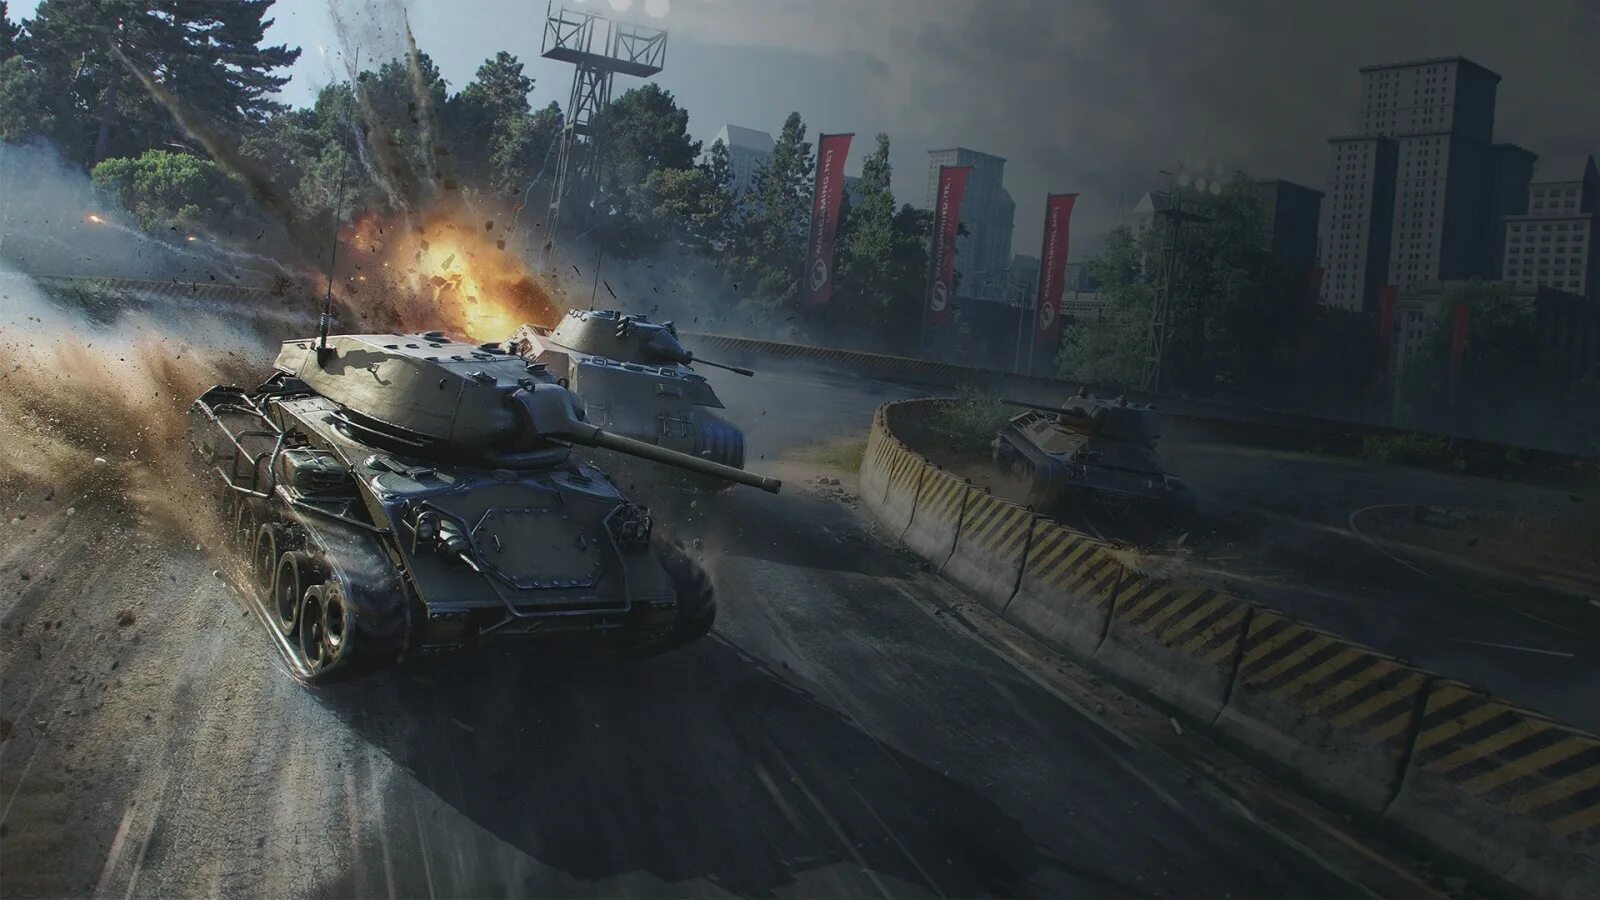 World of Tanks 8. Гонки в танках World of Tanks. Большие гонки World of Tanks 2019. Танковые гонки. Indo wot